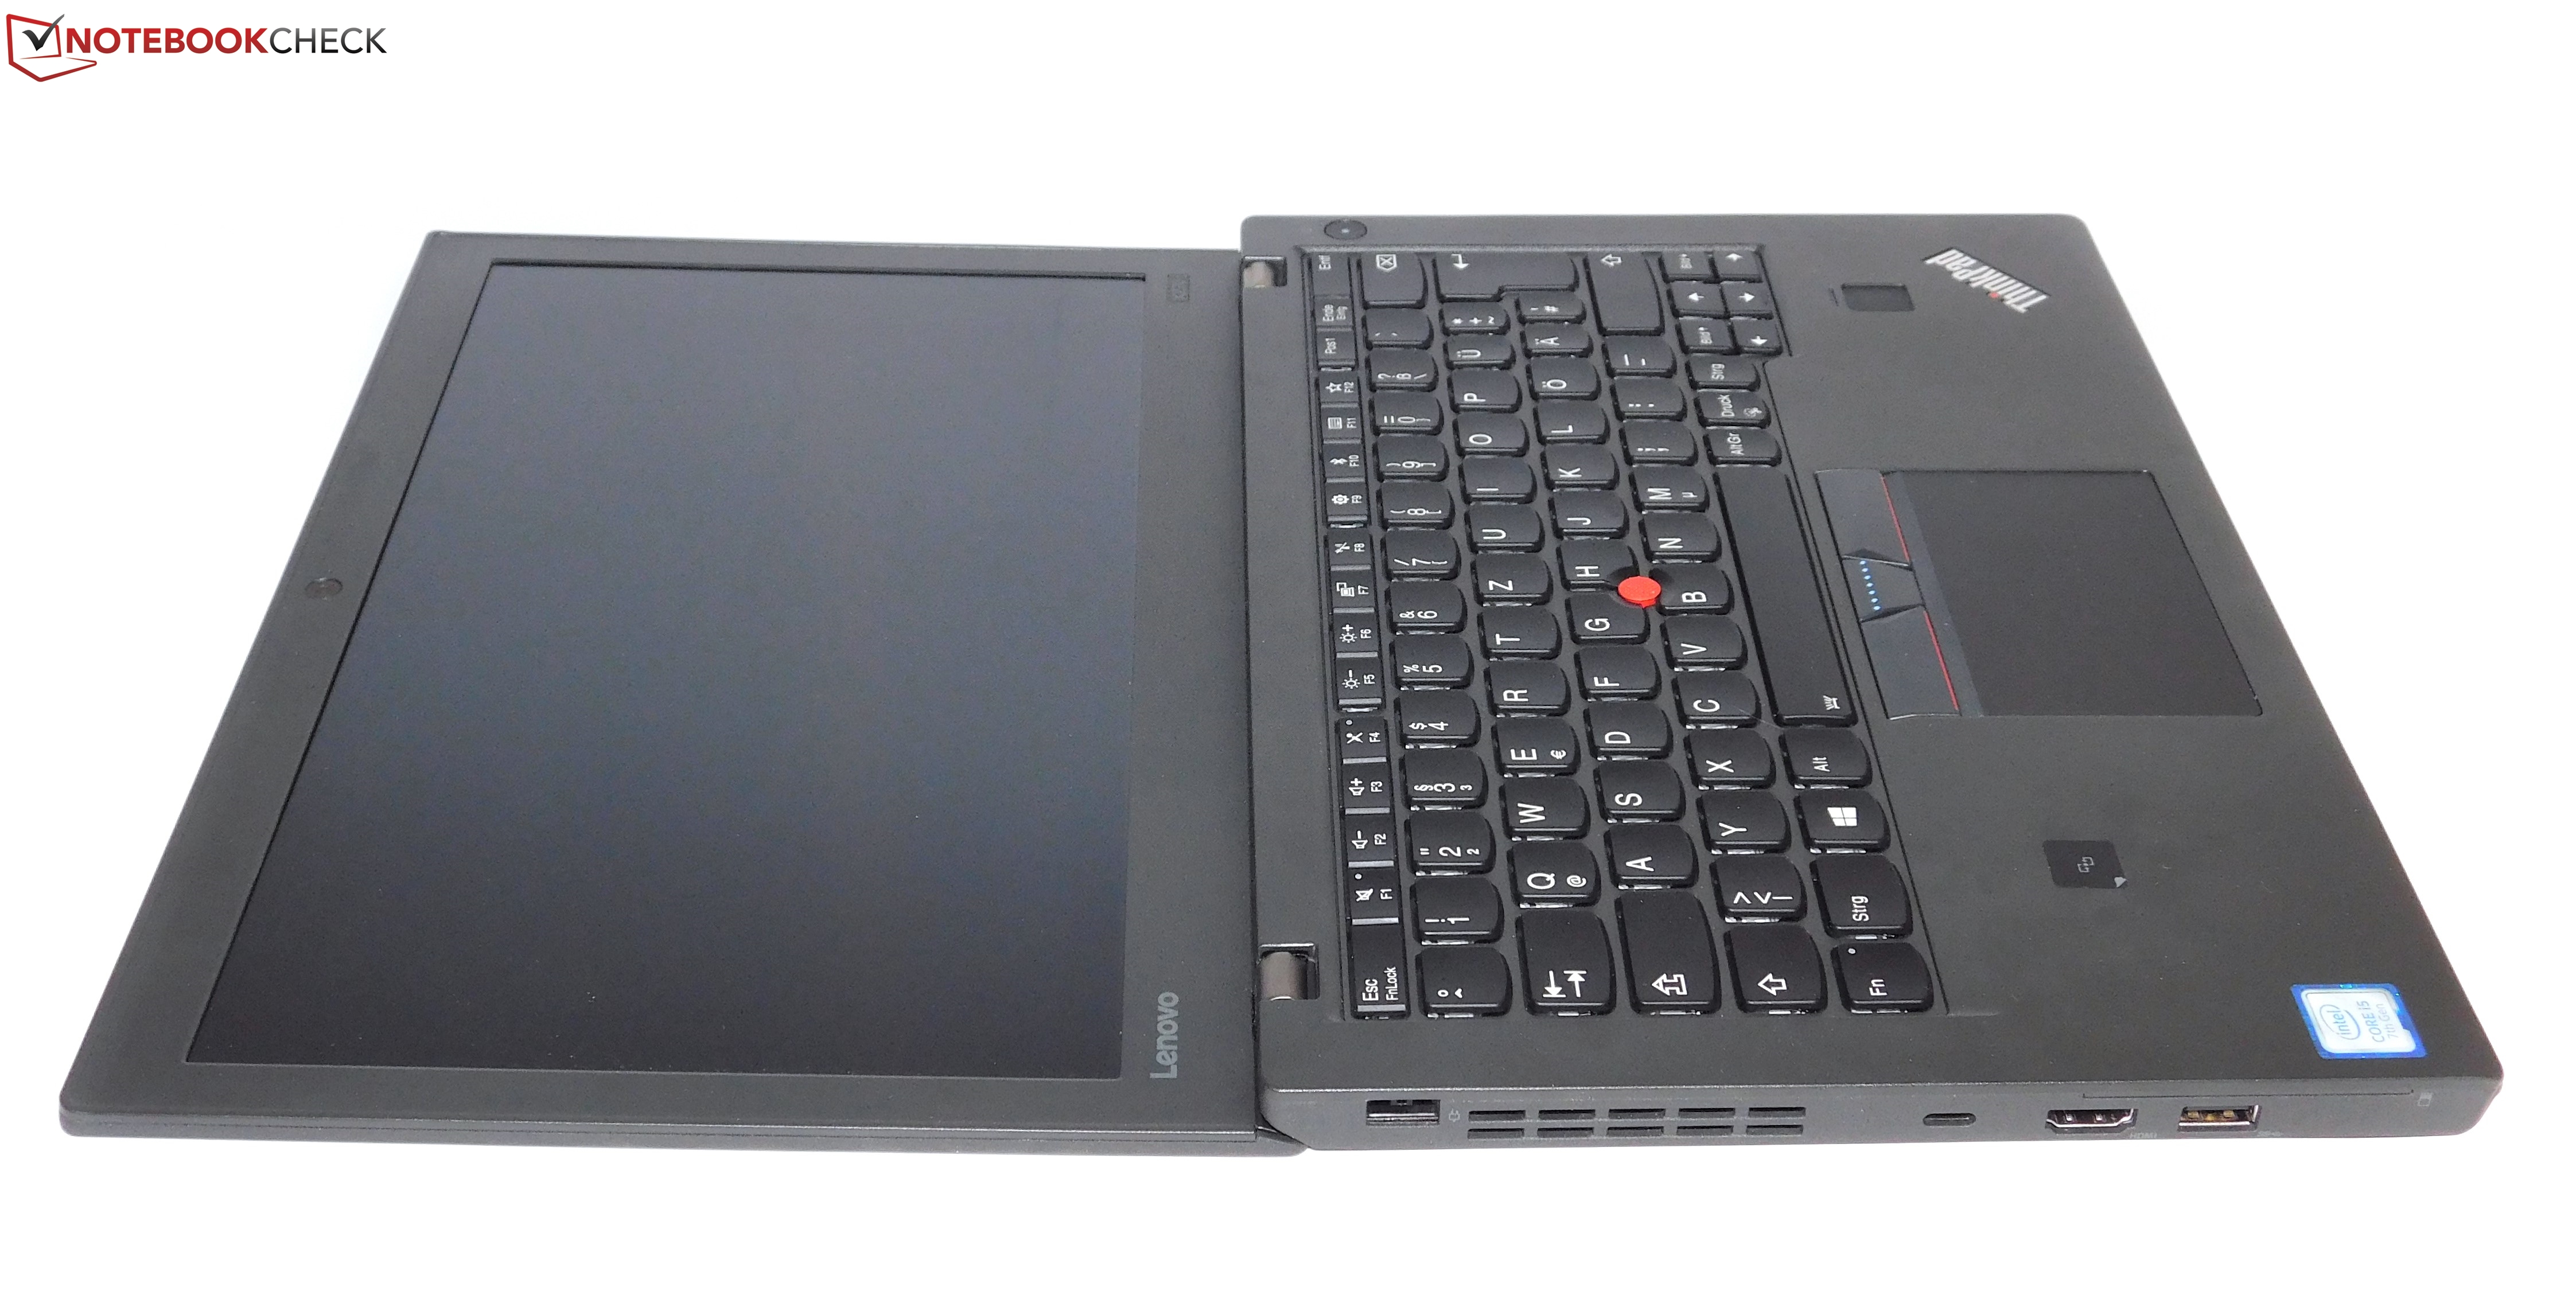 Lenovo Thinkpad X270 Core I5 Full Hd Laptop Review Notebookcheck Net Reviews